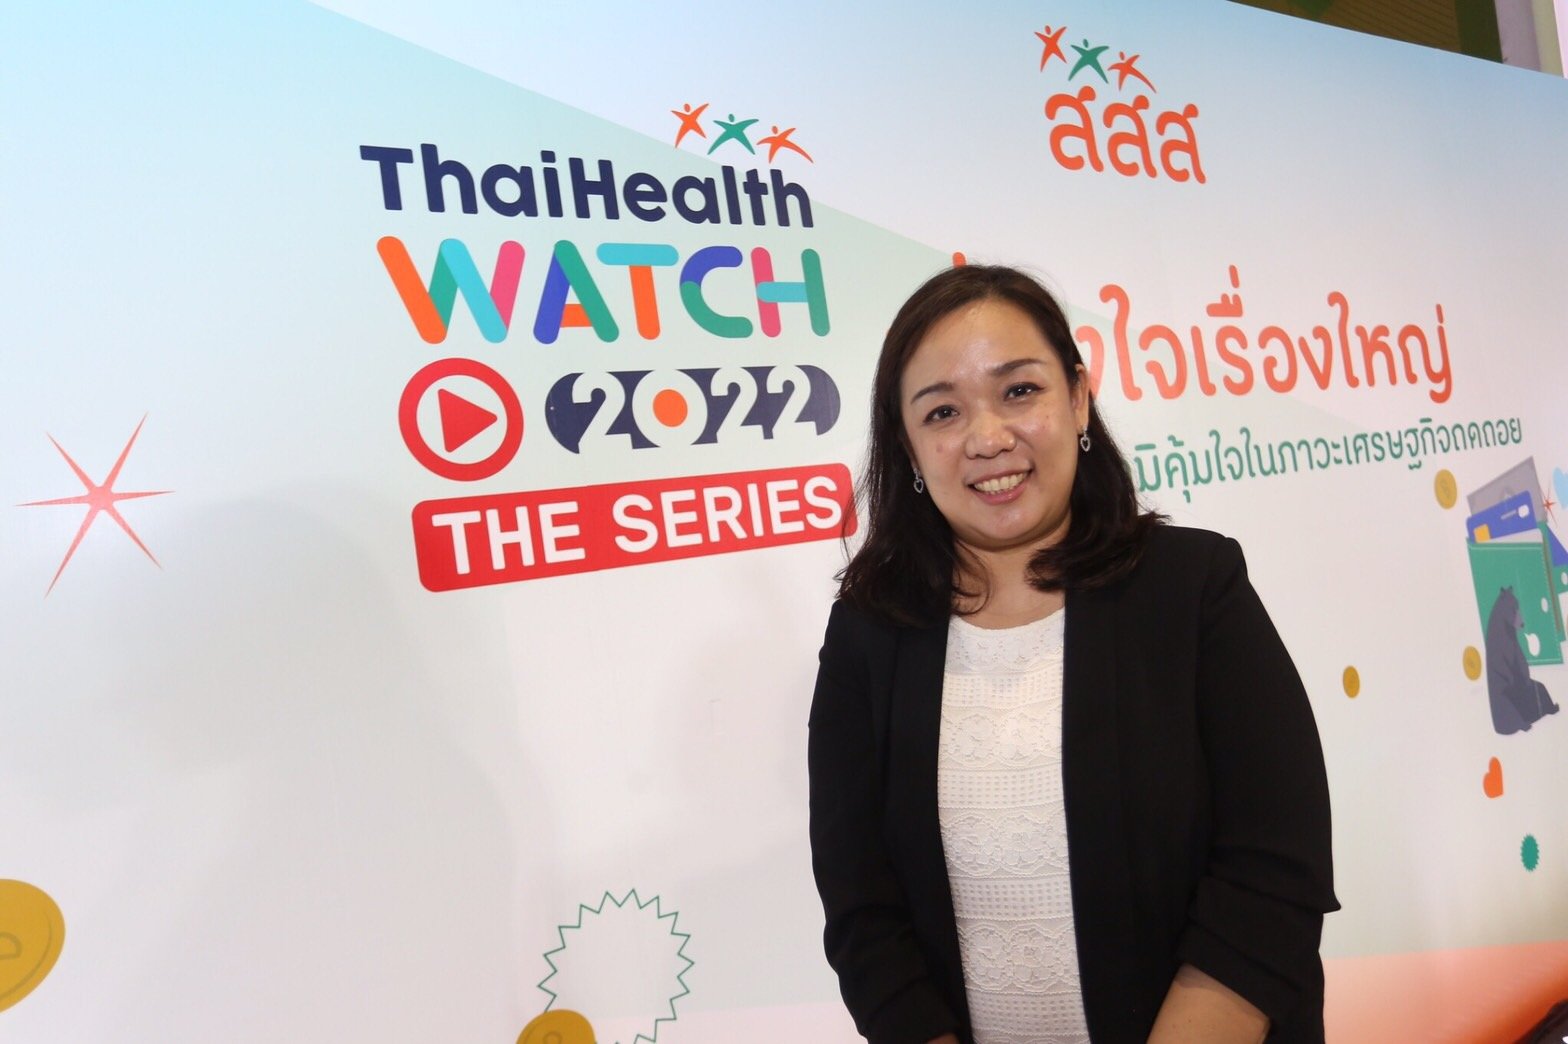 ThaiHealth Watch 2022 The Series แนะวิธีจัดการความเครียด ปรึกษาสุขภาพจิตออนไลน์ ผ่านเพจ Here to Heal thaihealth